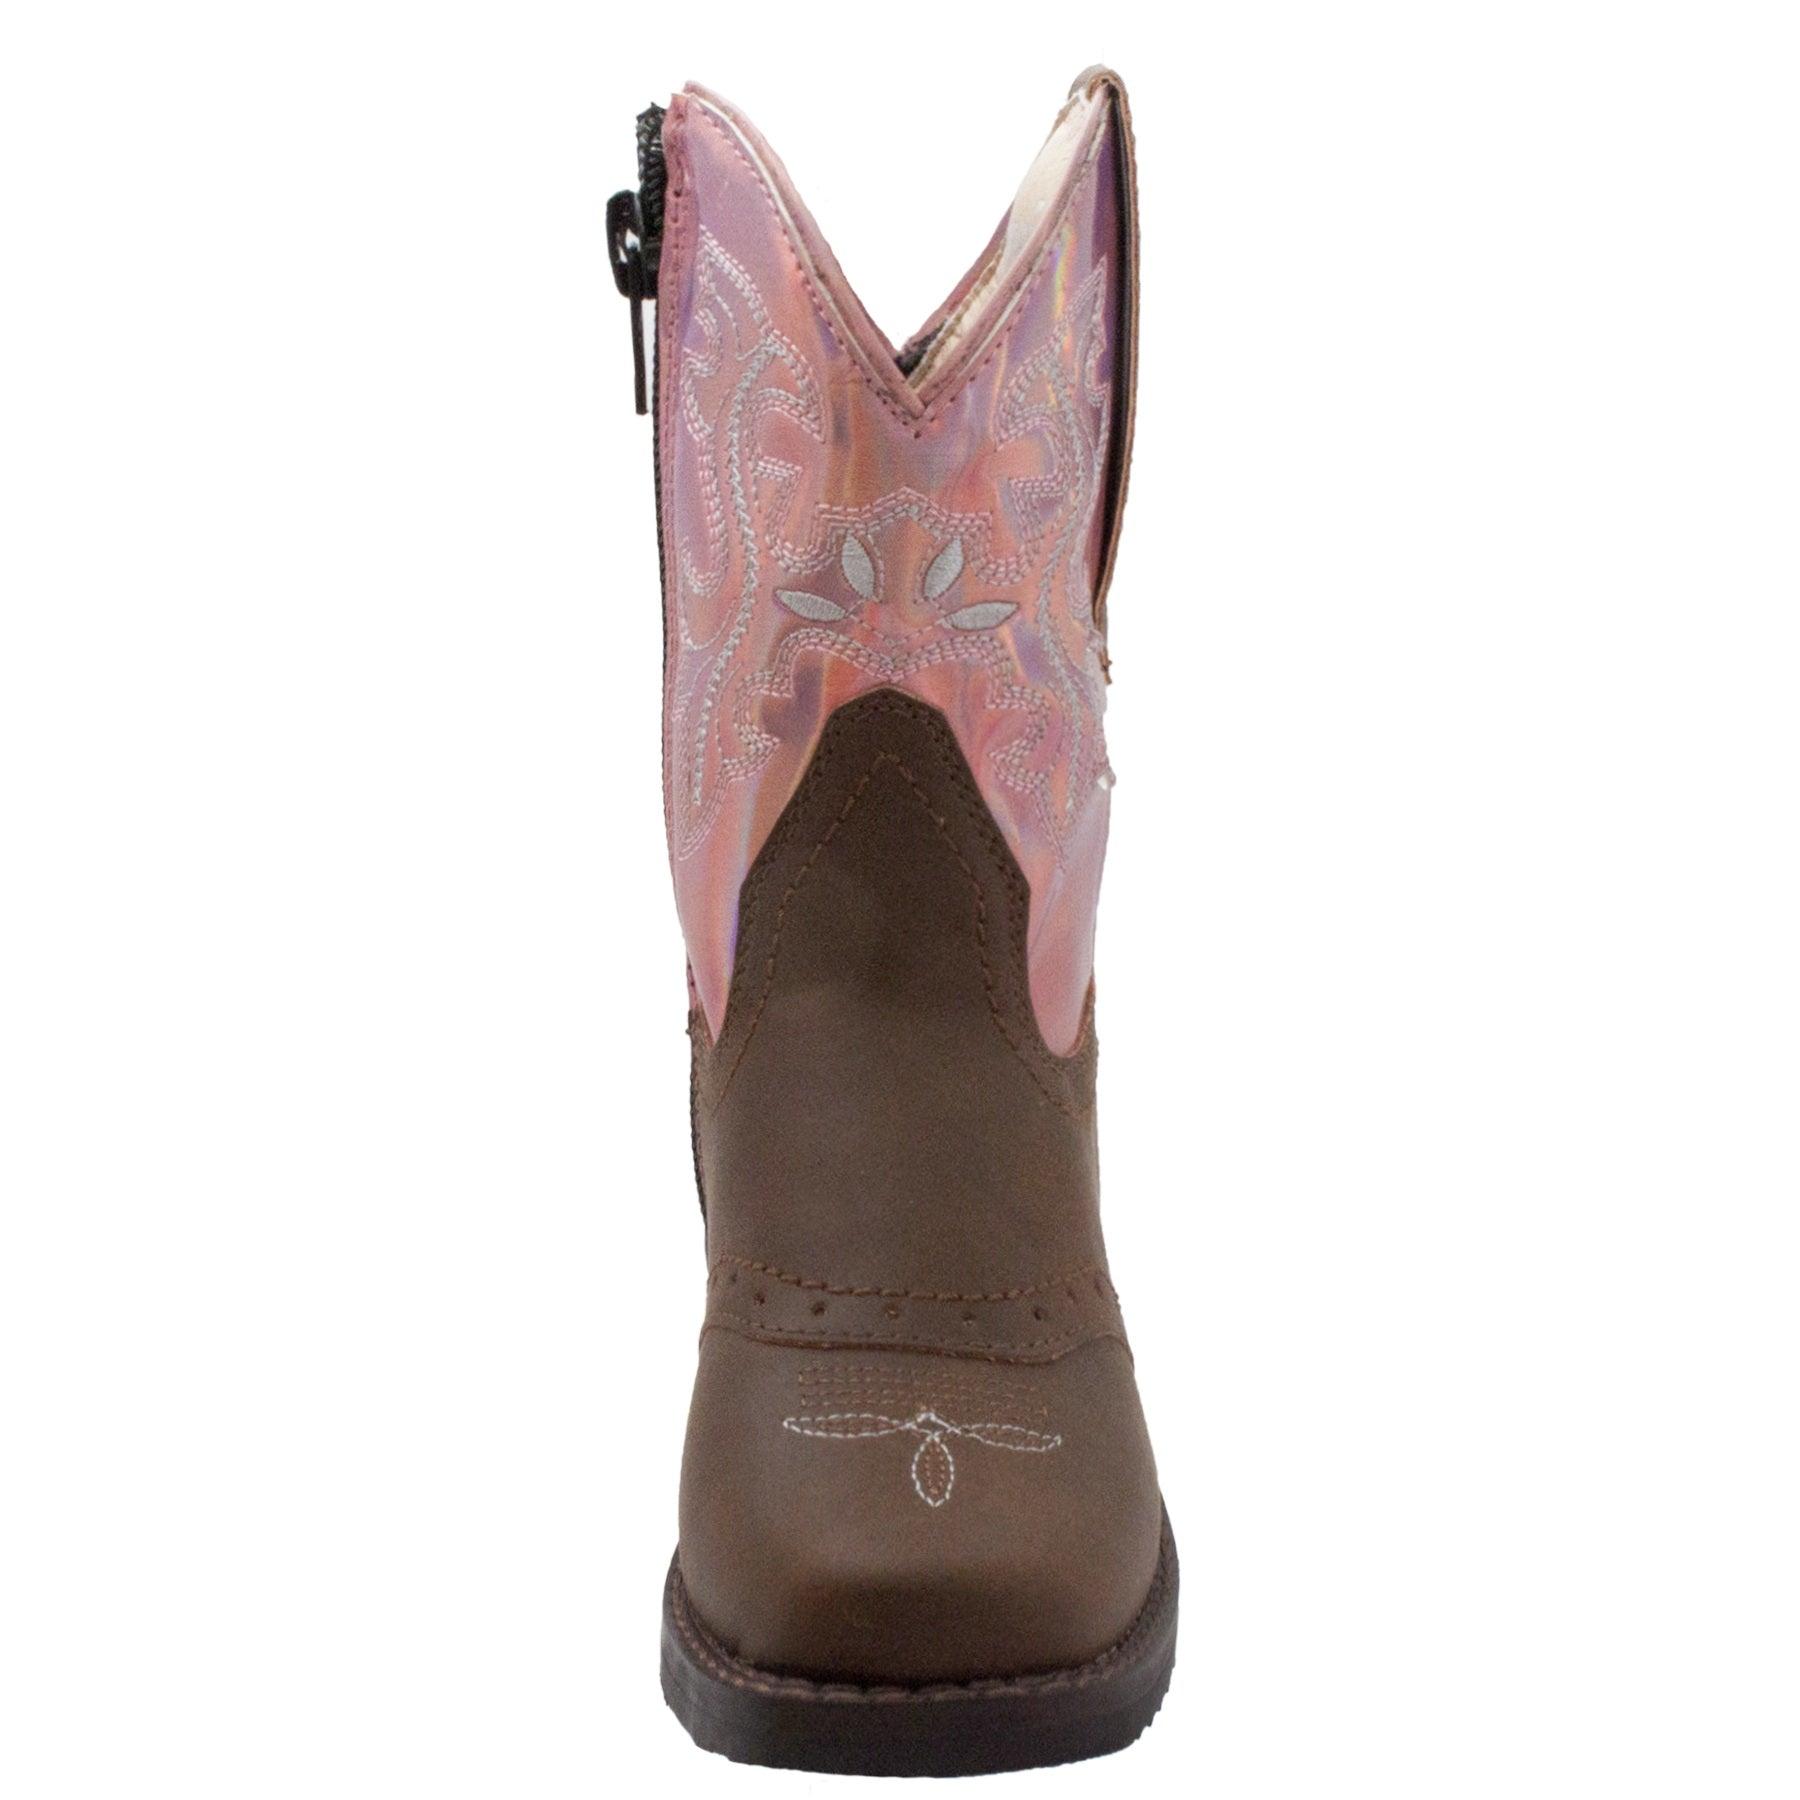 Case IH Toddler's Western Light Up Boot Brown/Pink - Flyclothing LLC